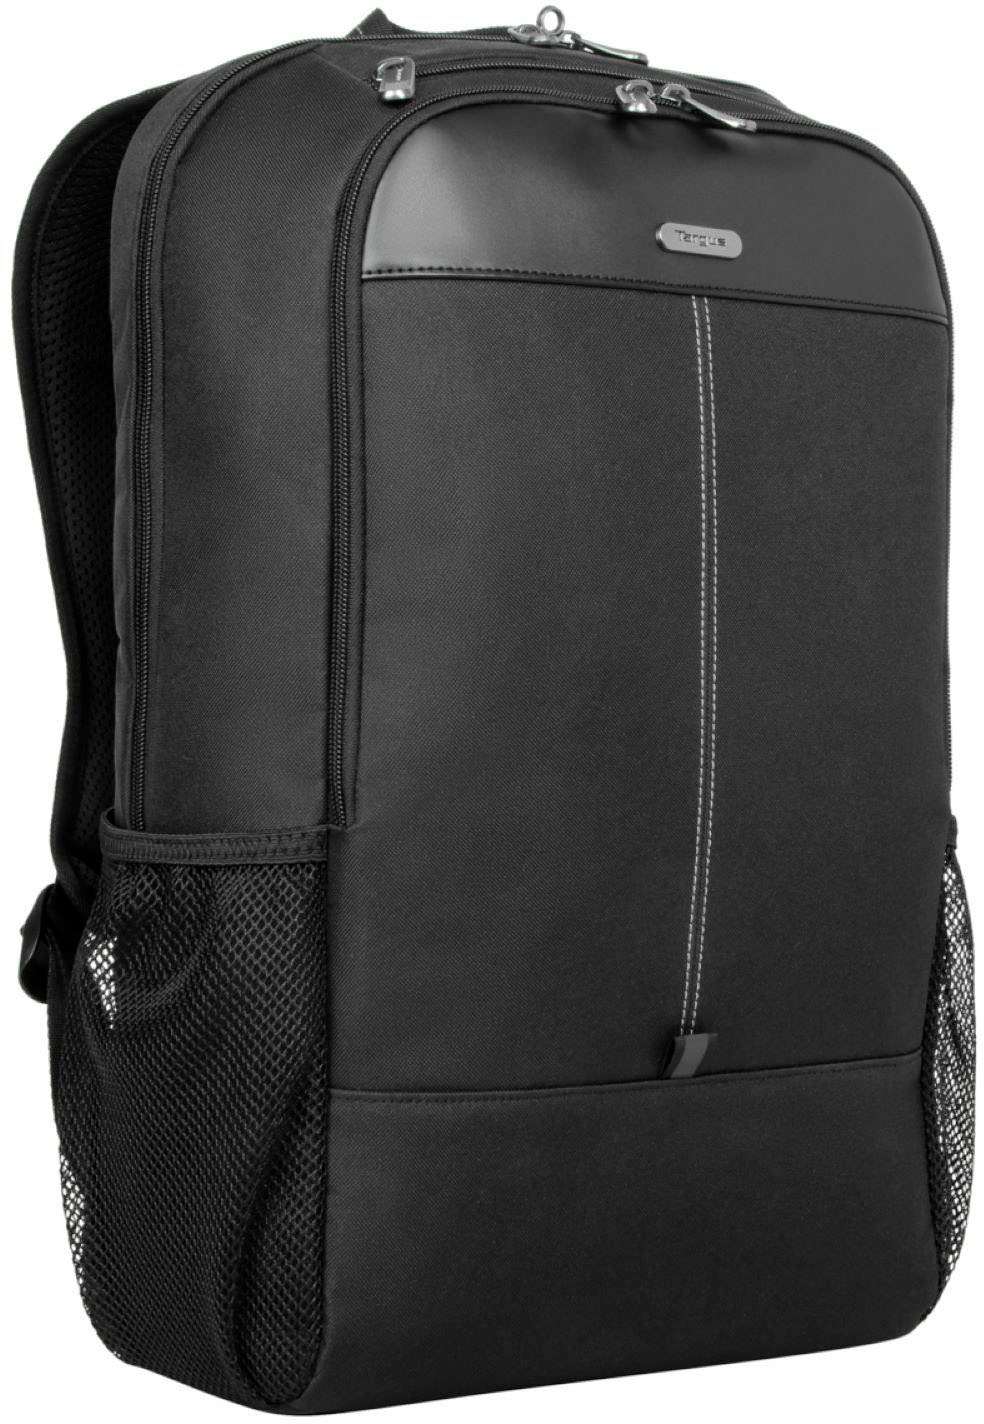 Left View: Targus - 17" Classic Backpack - Black